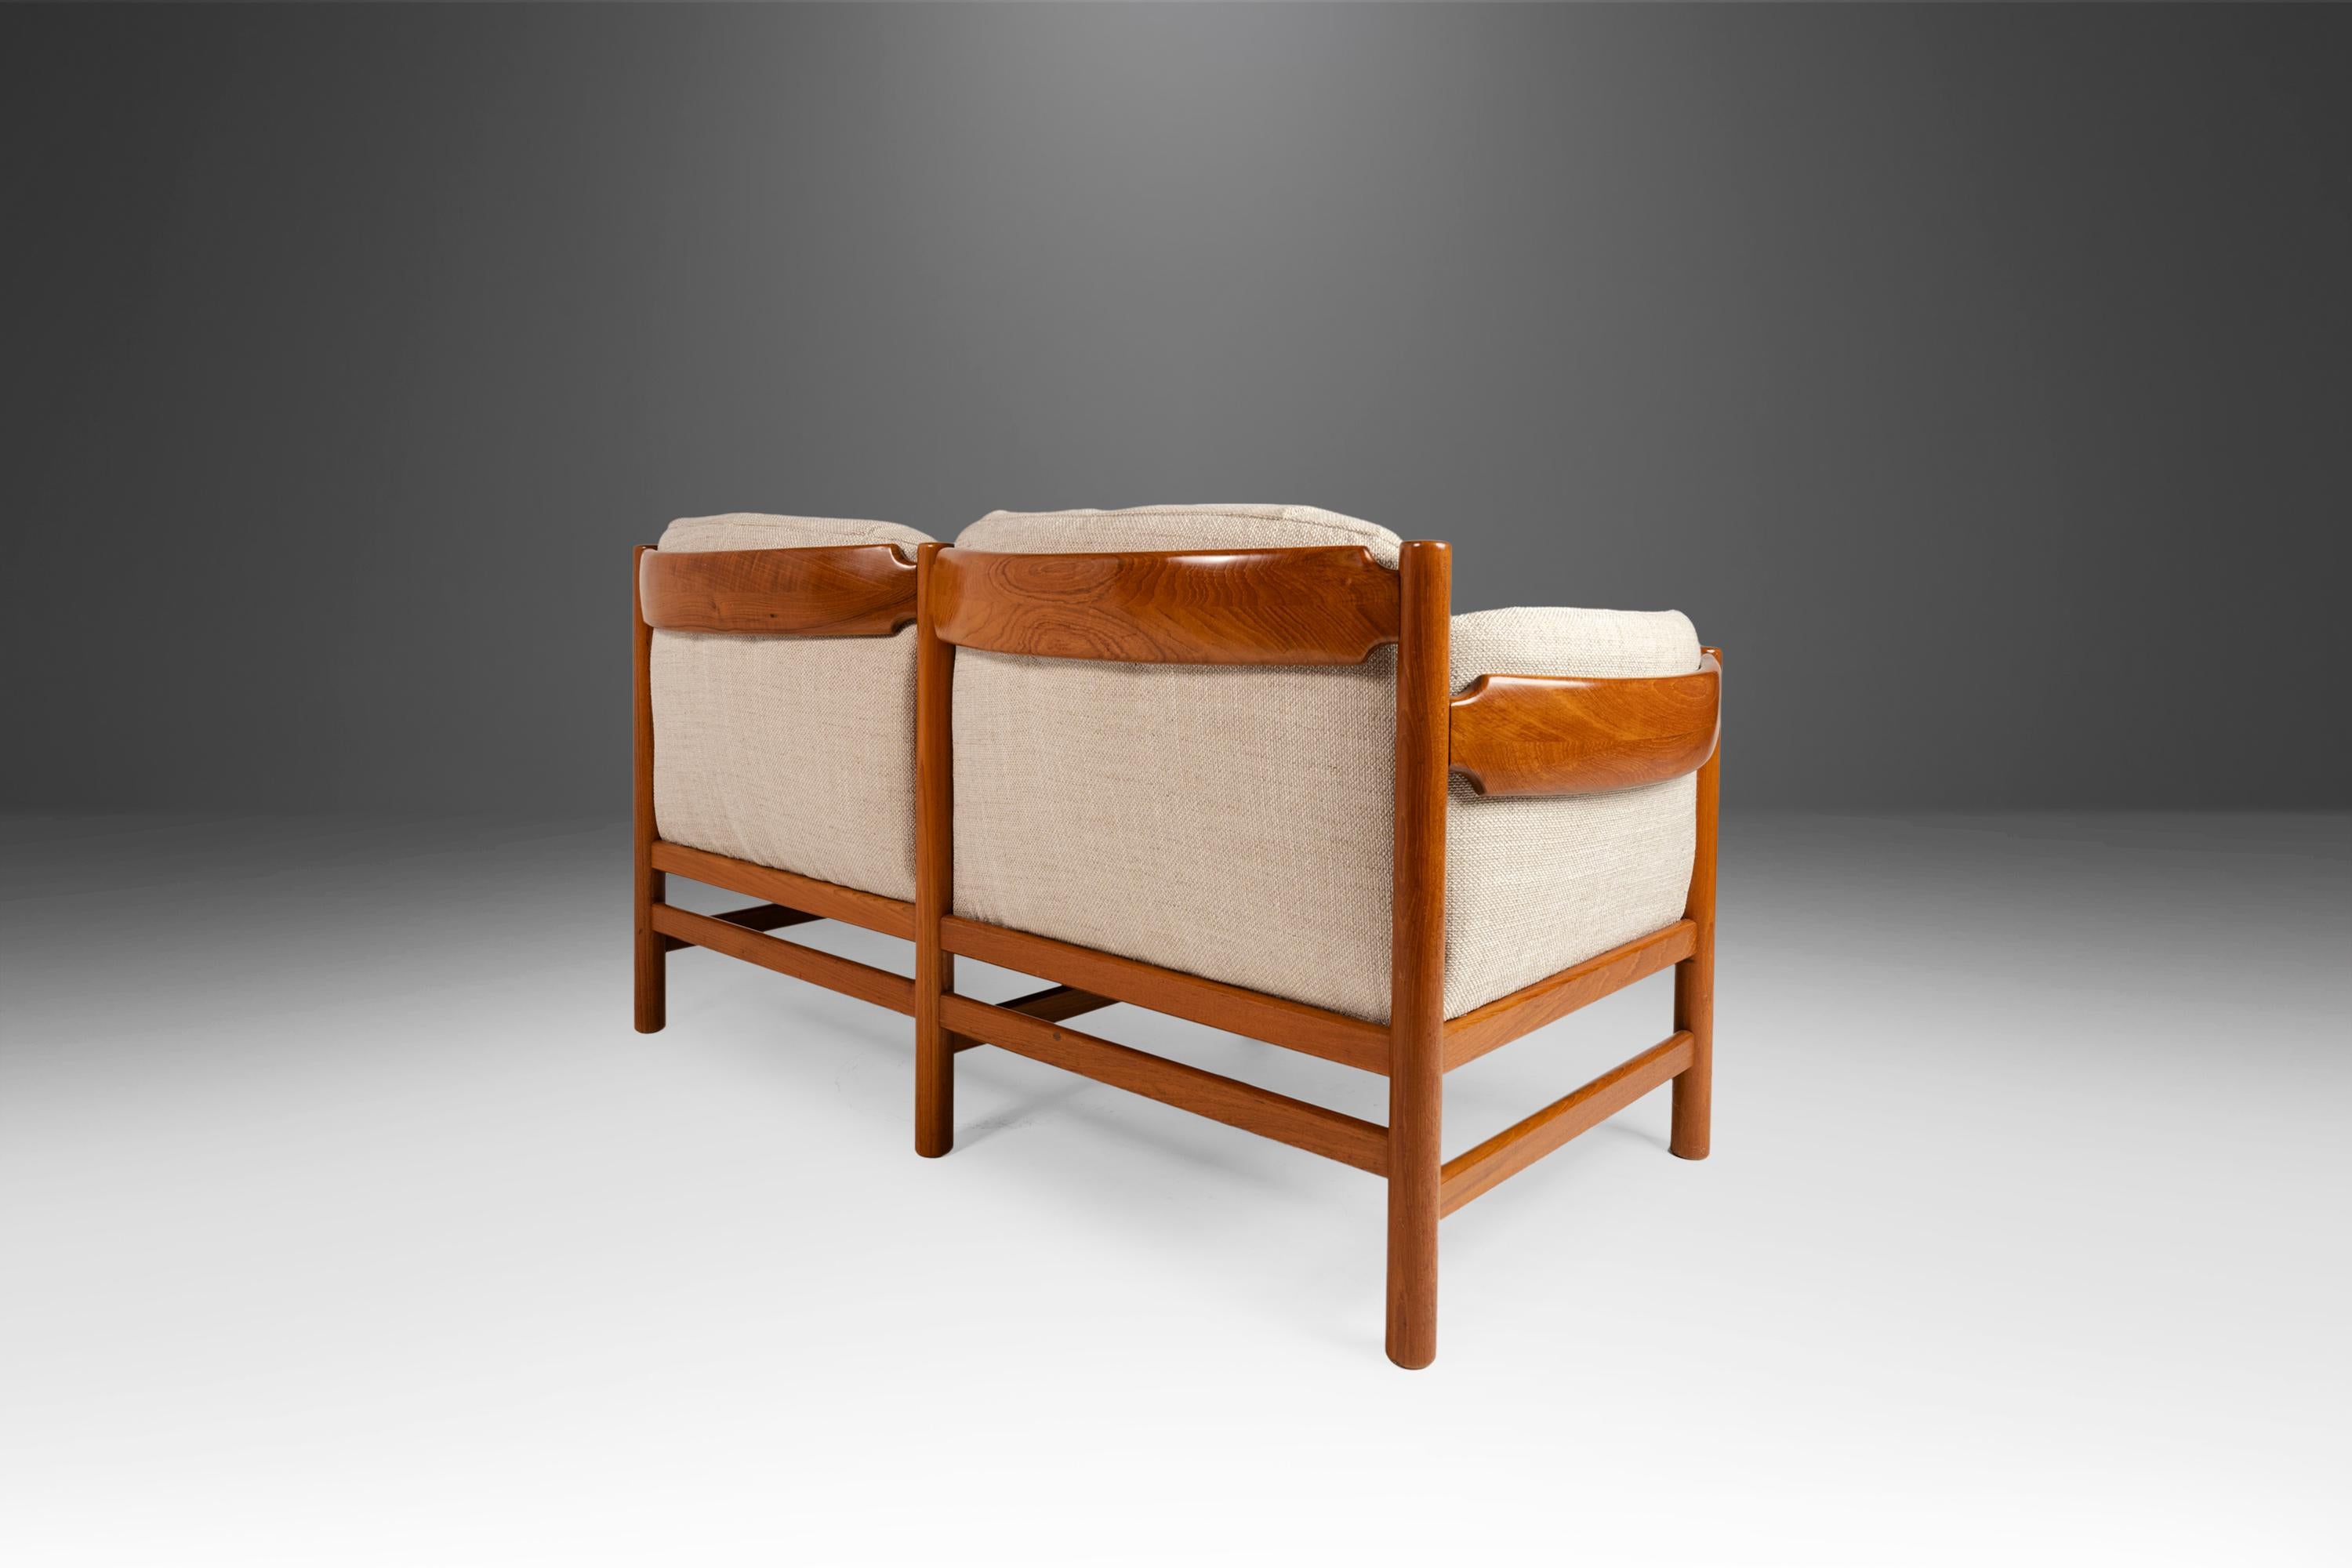 Mid-20th Century Danish Modern Sofa / Loveseat by Jydsk Mobelvaerk in Teak and New Fabric, 1960's For Sale